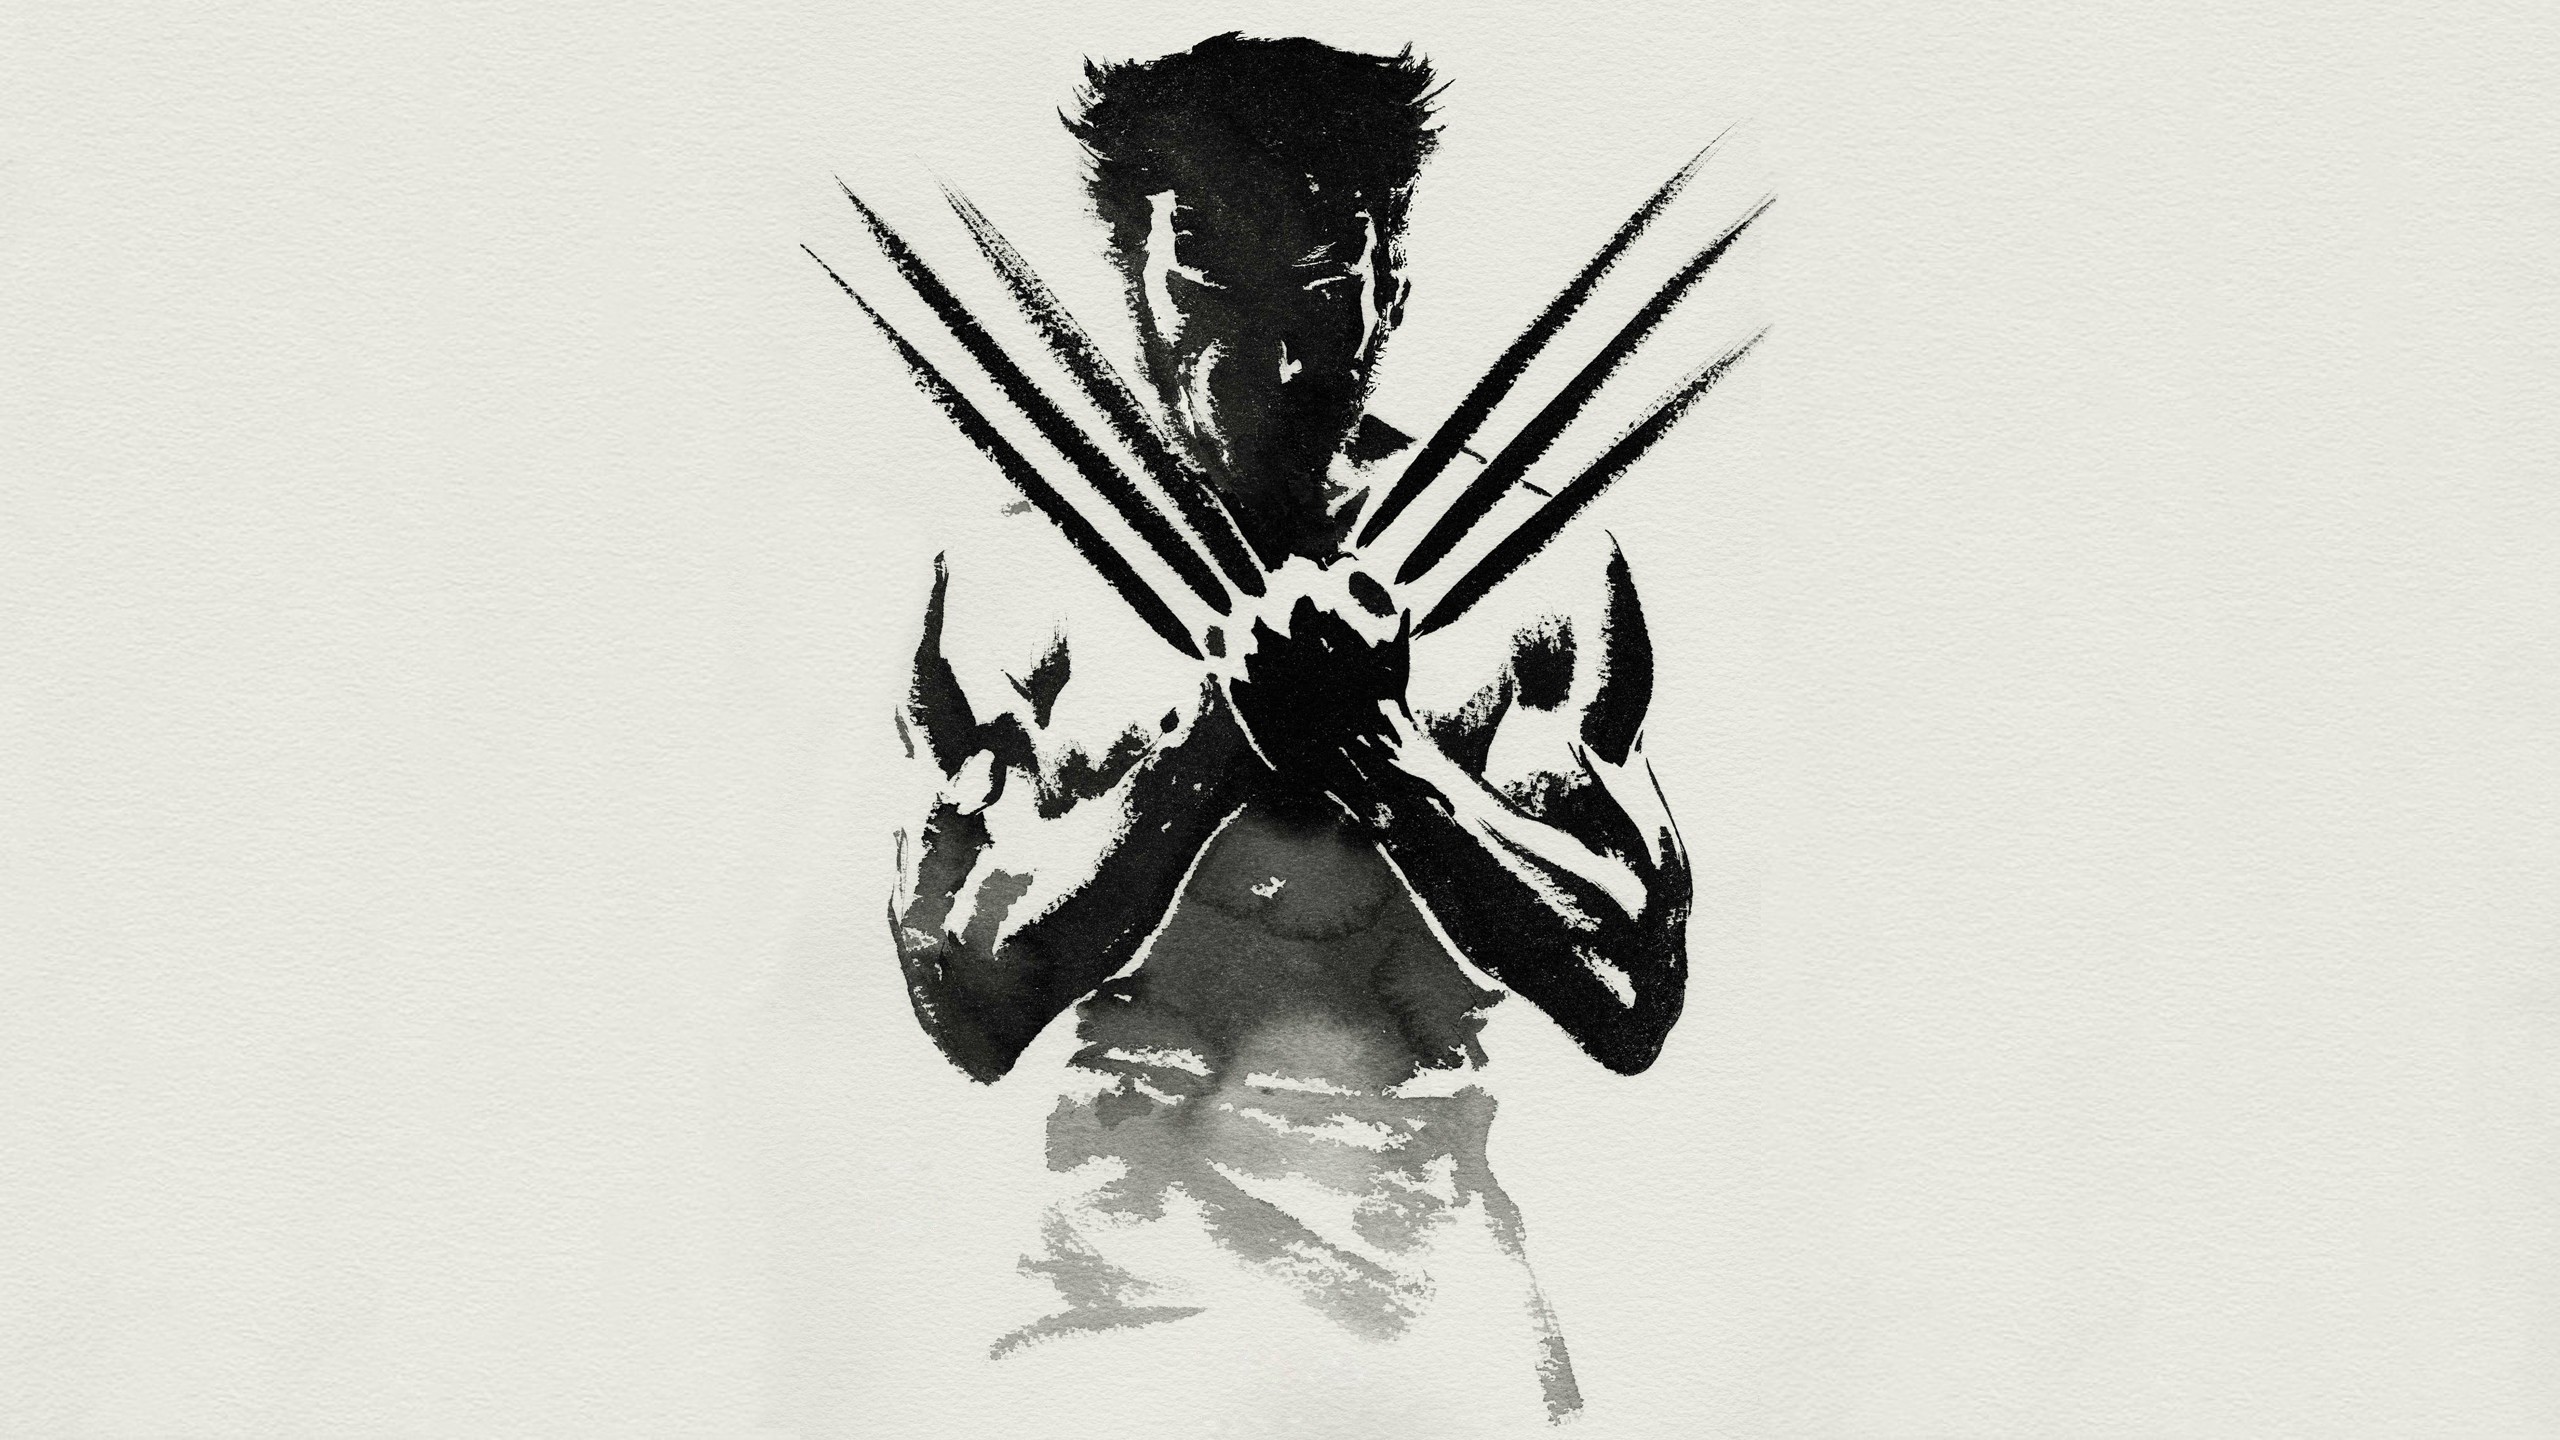 General 2560x1440 Hugh Jackman Wolverine movies monochrome X-Men Mutant simple background white background actor Australian superhero Marvel Comics